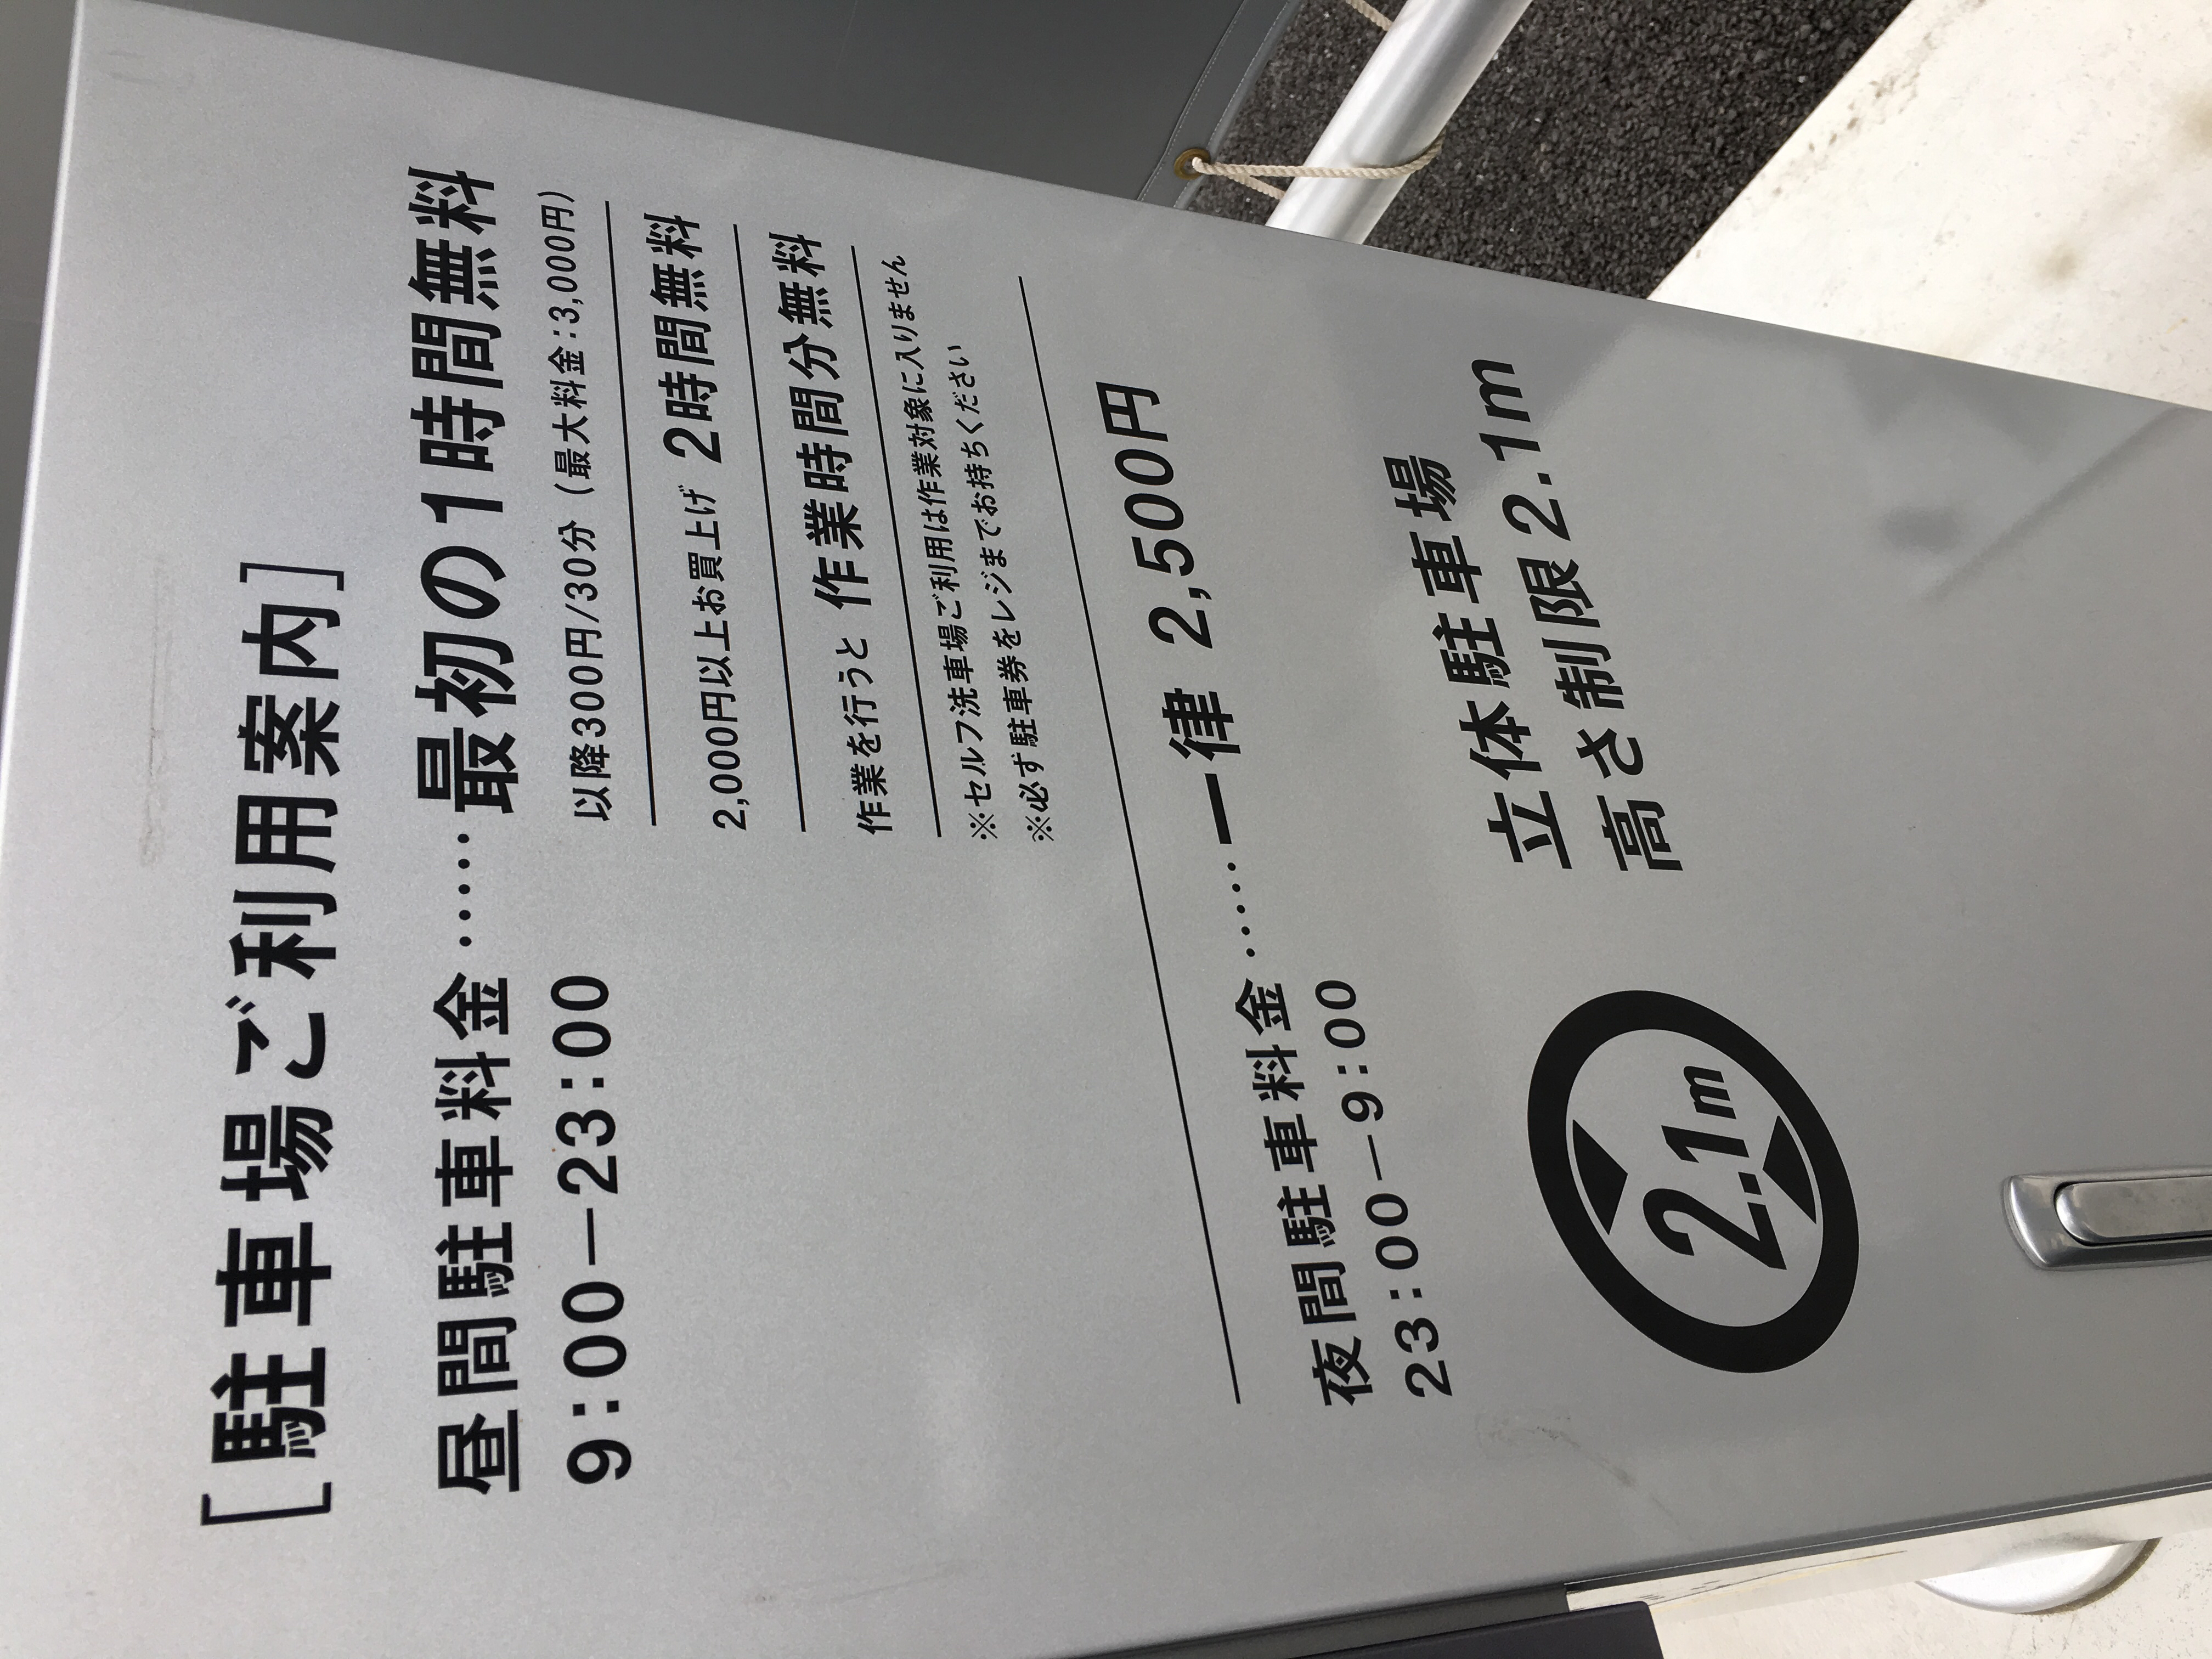 A Pit Autobacs Shinonome 旧スーパーオートバックス東京ベイ東雲 電気自動車の充電スタンド口コミ Evsmart